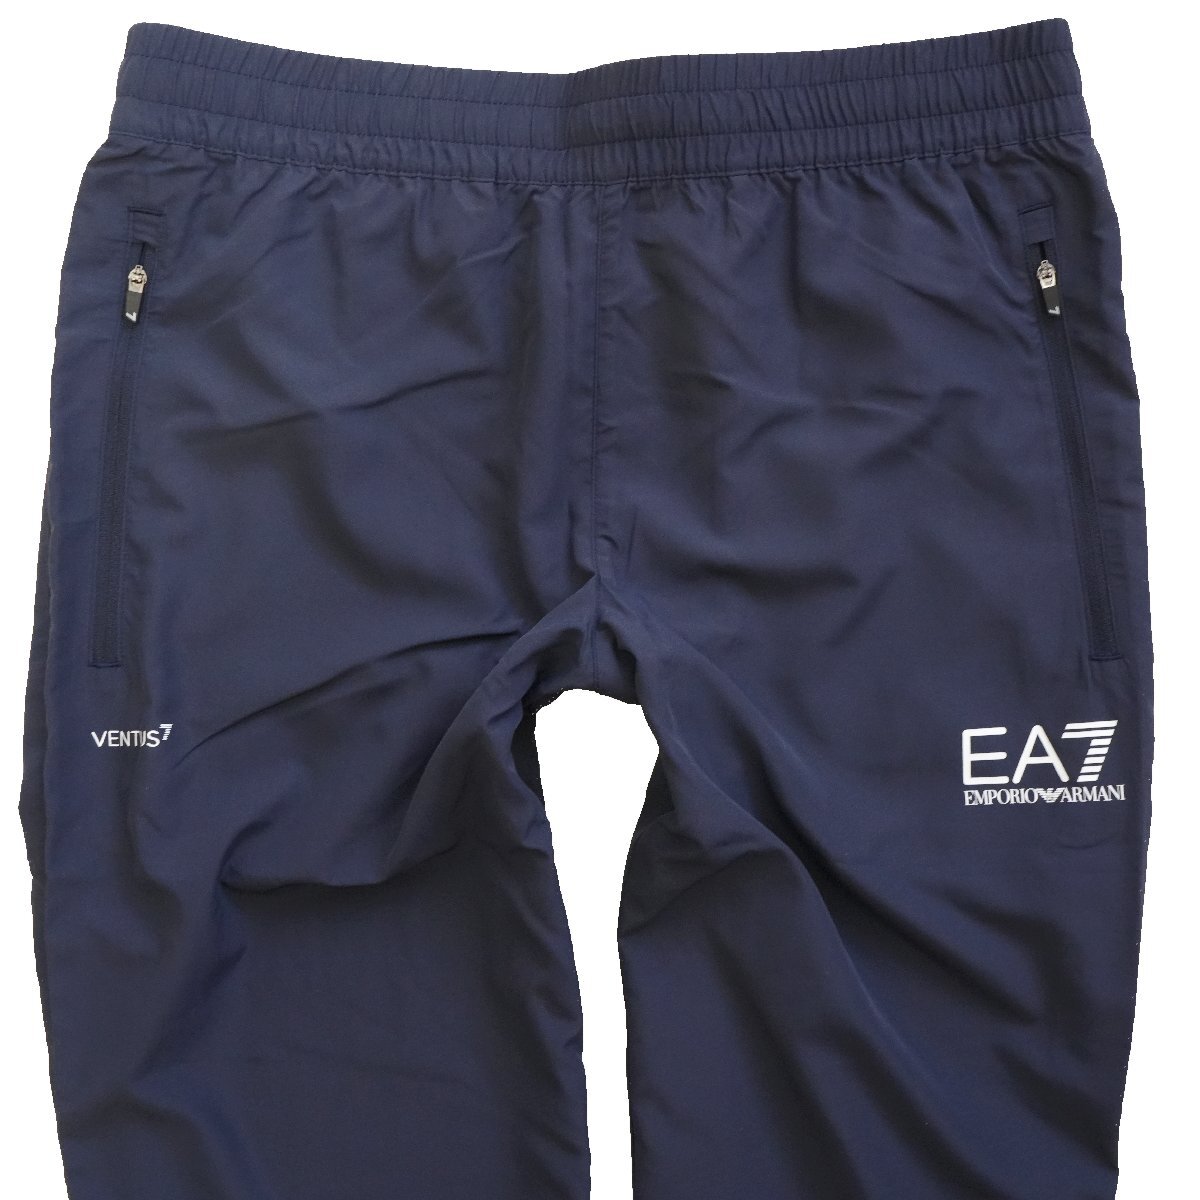 2024* newest * Emporio Armani EA7* super-convenience setup Logo nylon blouson to Lux -tsu pants Tec series XL navy blue *EMPORIO ARMANI